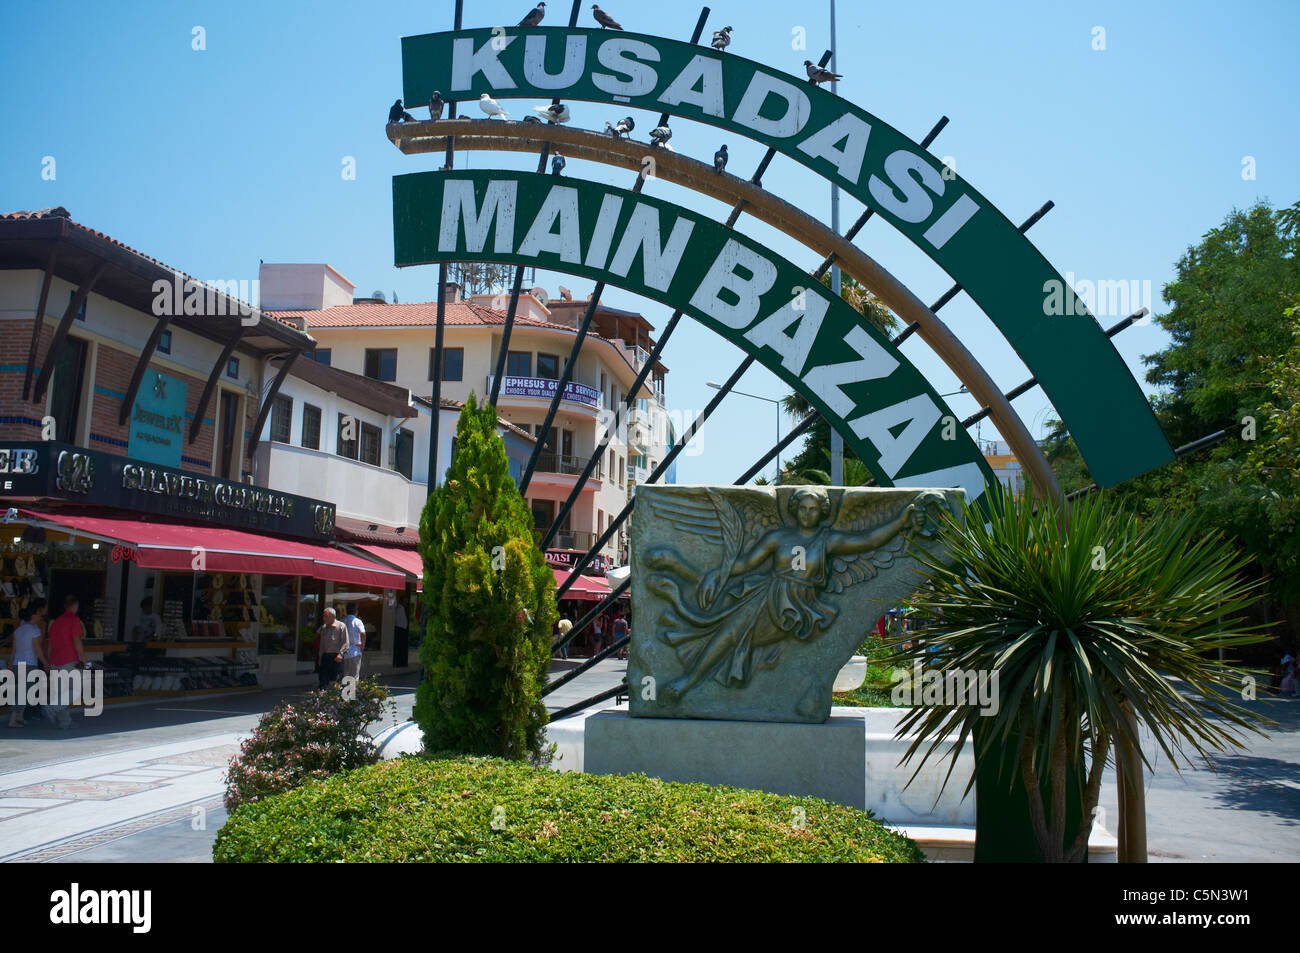 Entrance to the Main Bazaar sign Kusadasi Turkey Stock Photo